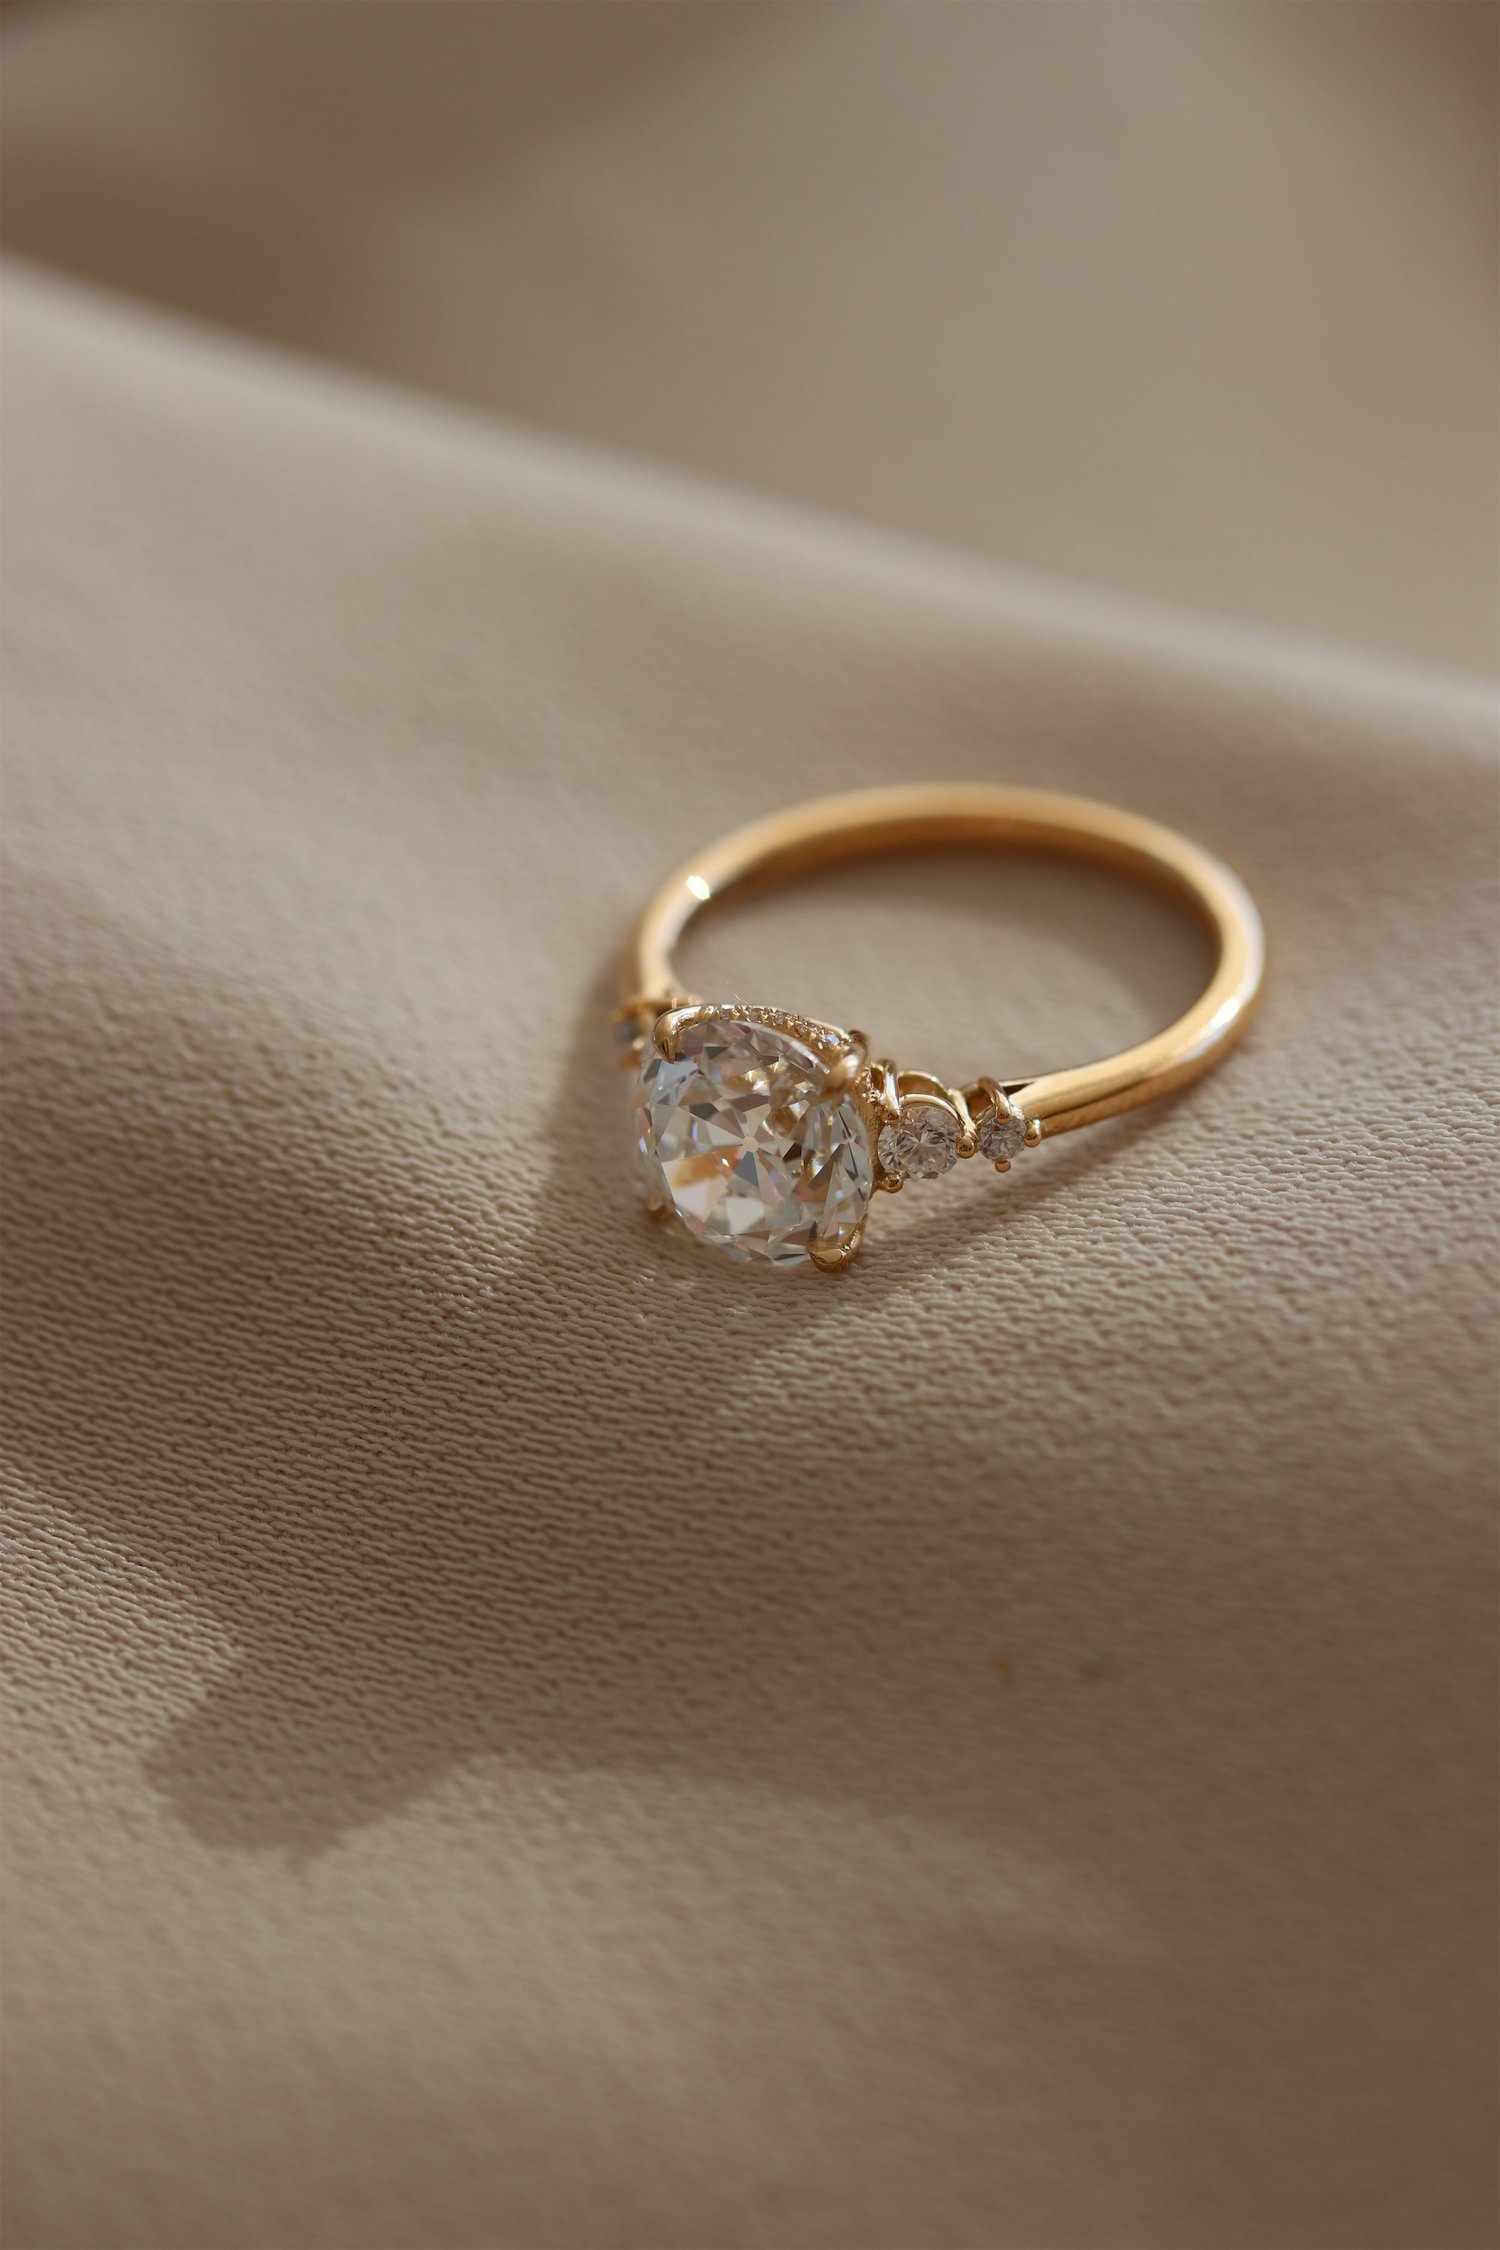 Shop — Susie Saltzman | Luxury Engagement Rings & Custom Jewelry